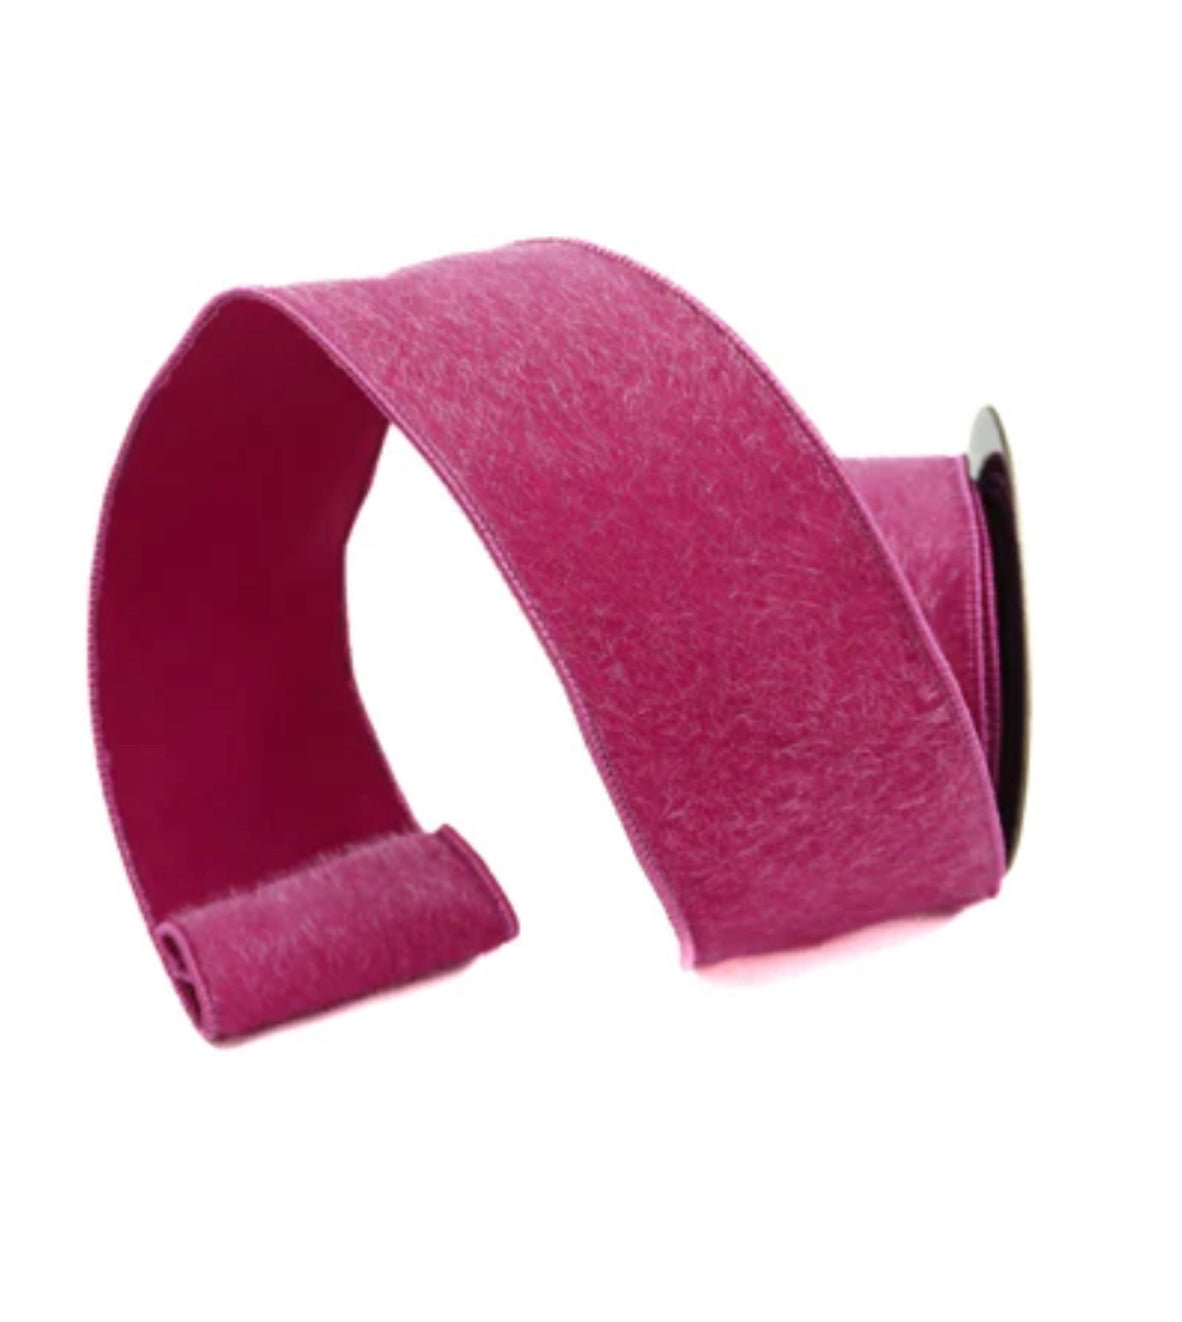 Hot pink fuzzy fleece 2.5” farrisilk wired ribbon - Greenery MarketRibbons & TrimRc073-08